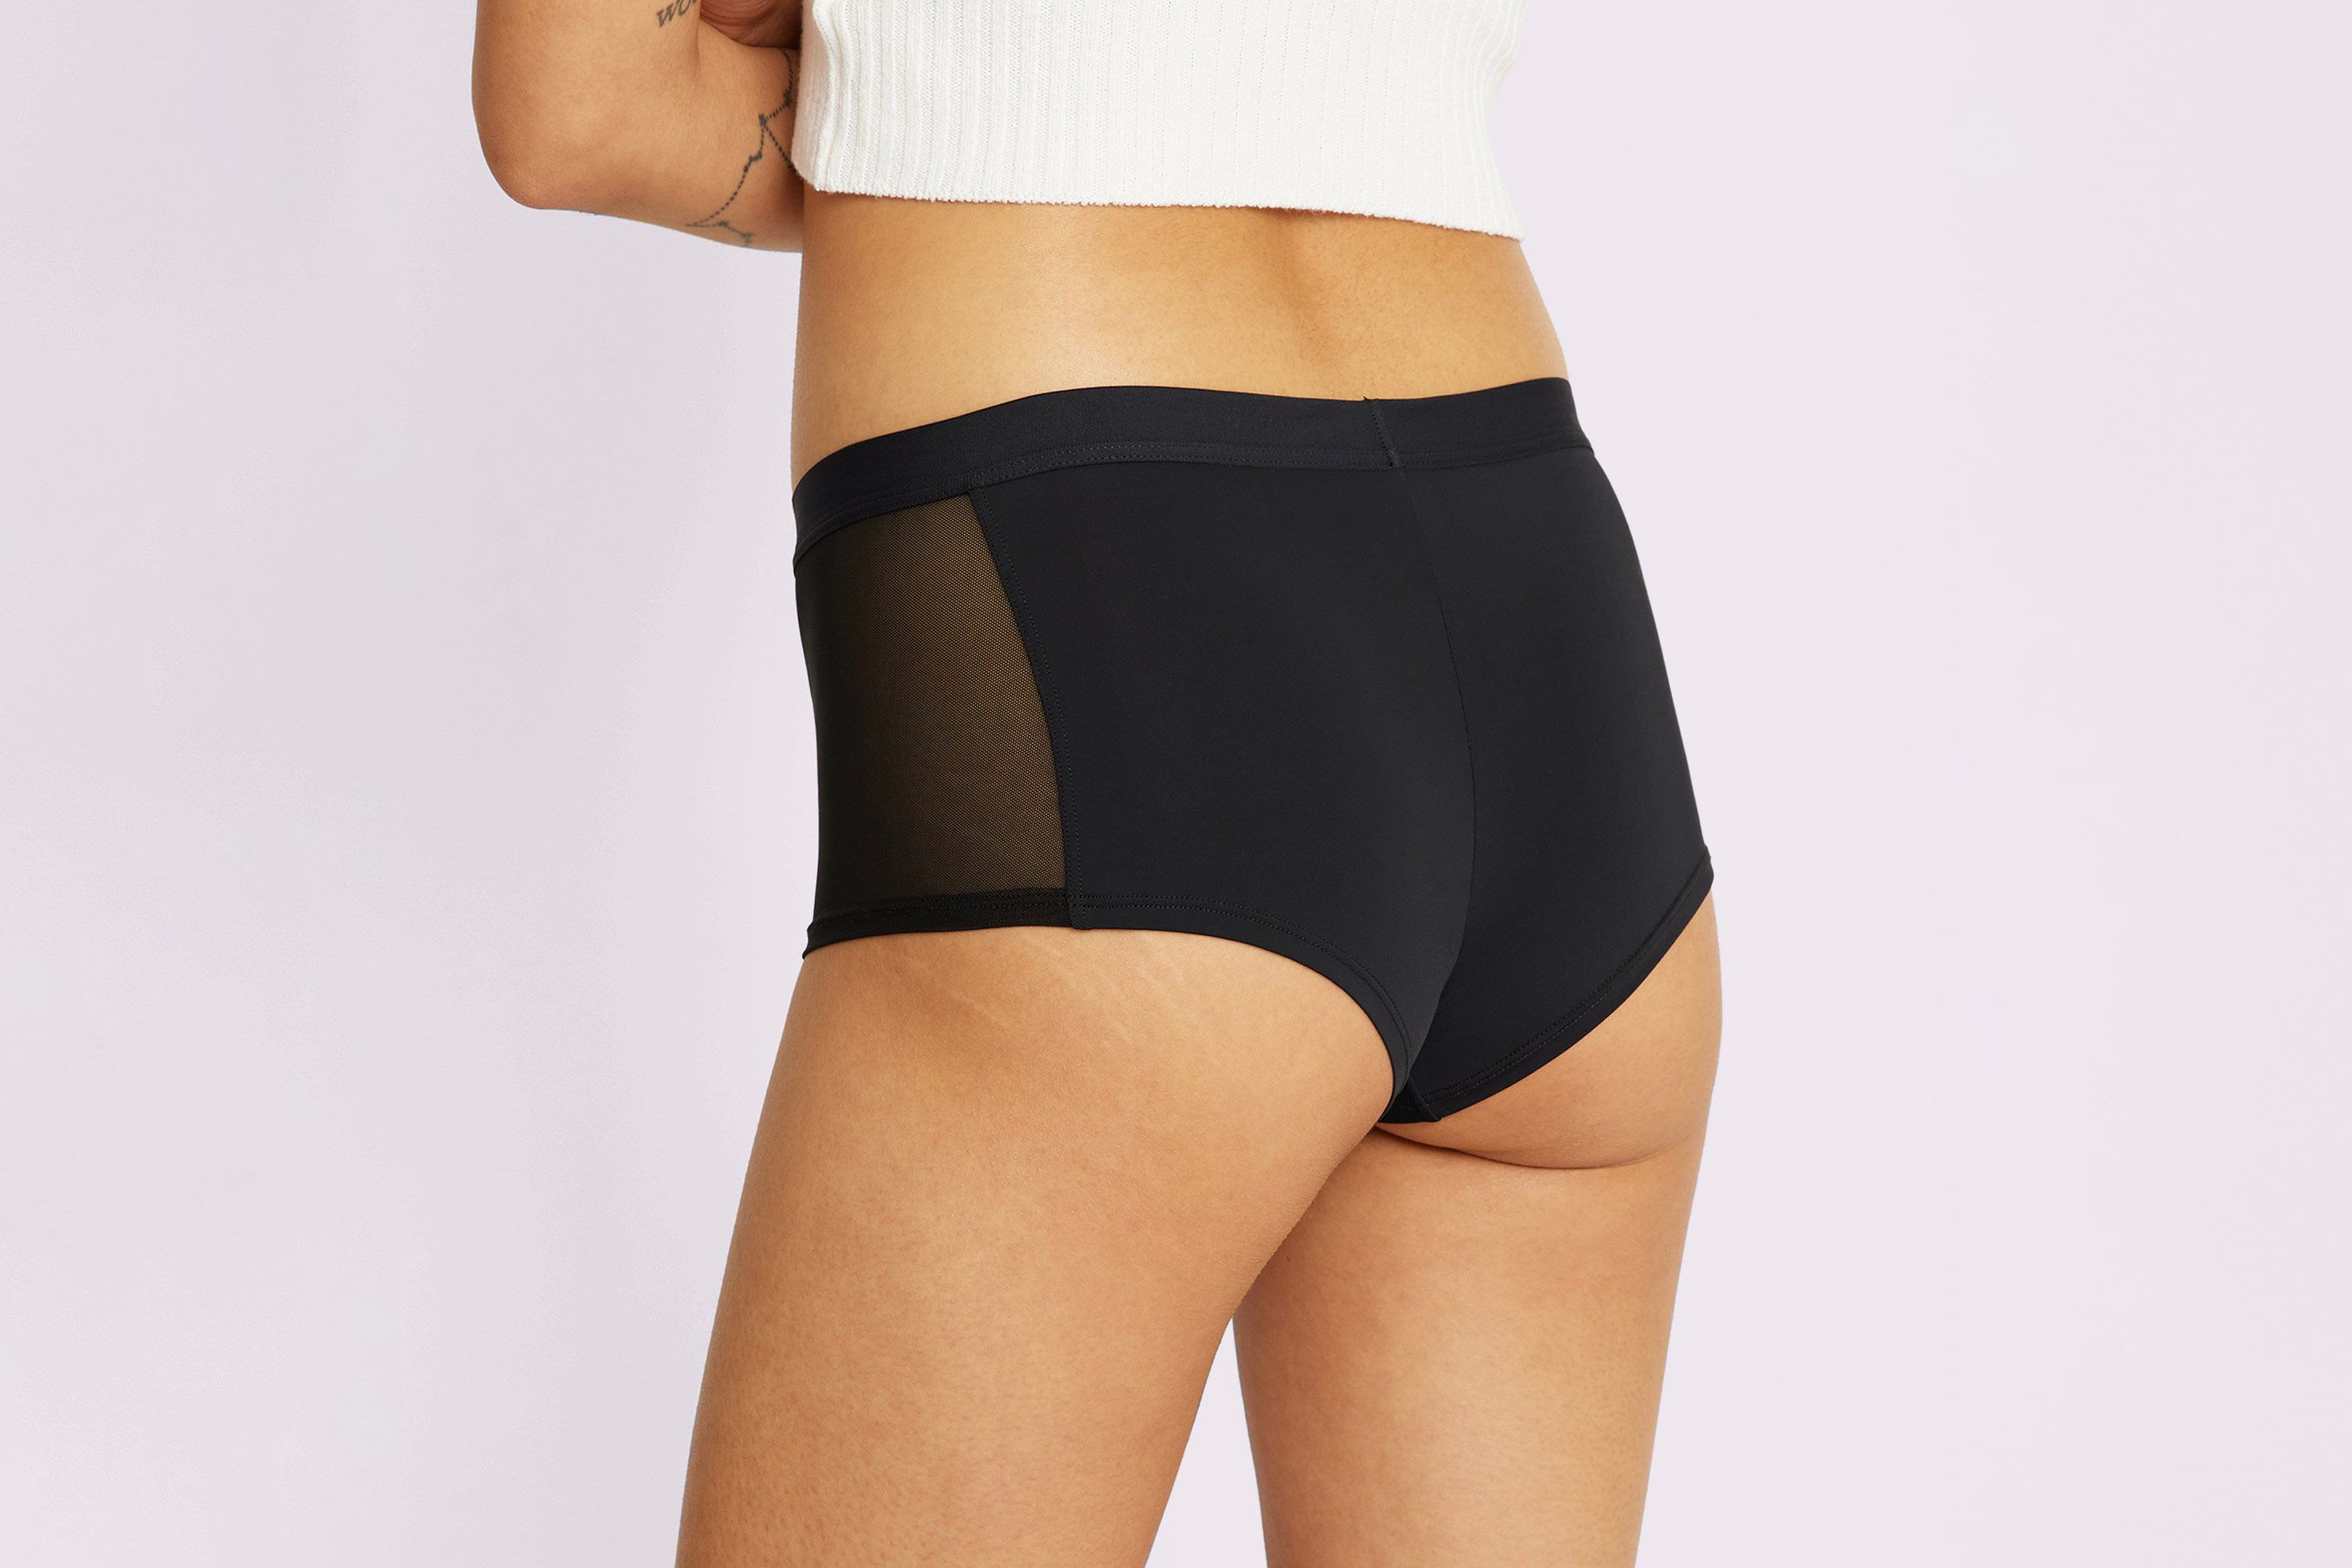 Model looking ass in black panty and long slender legs